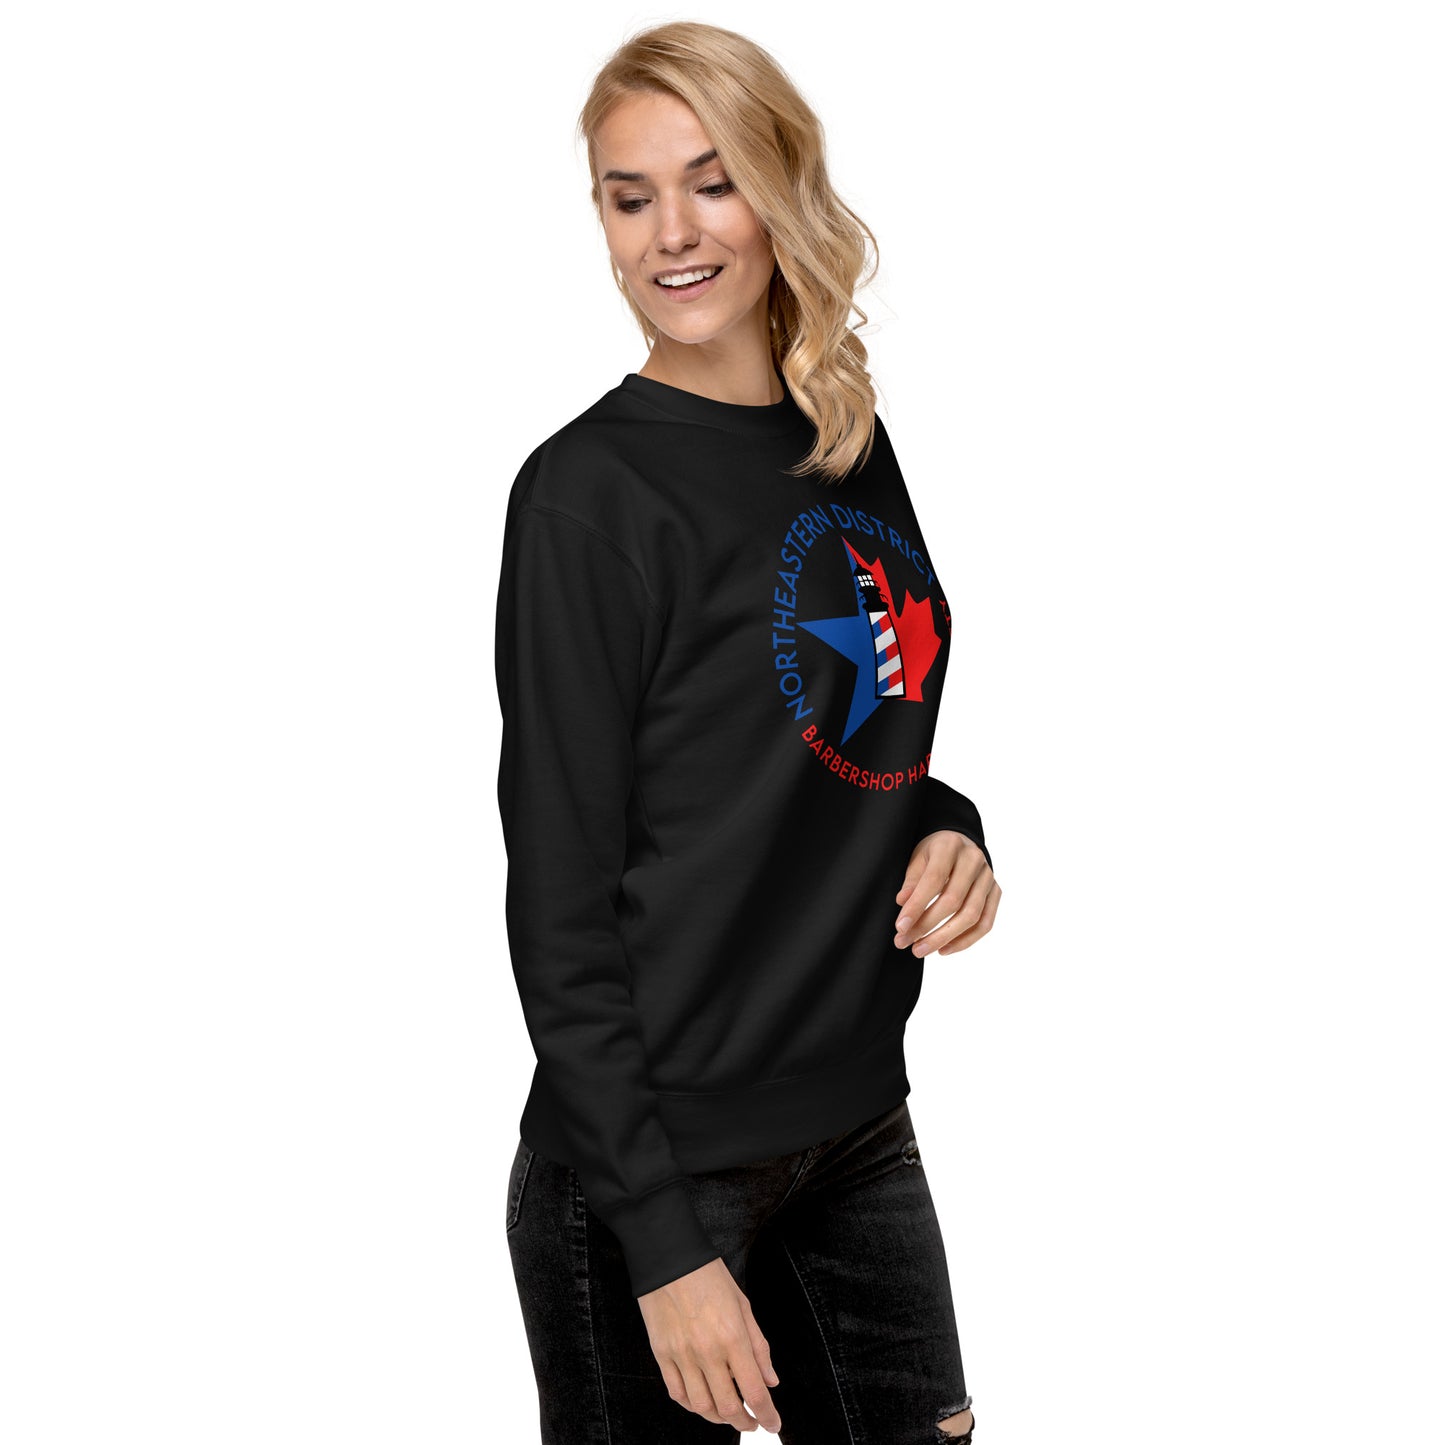 NED - Printed Regular Relaxed fit - Premium Sweatshirt